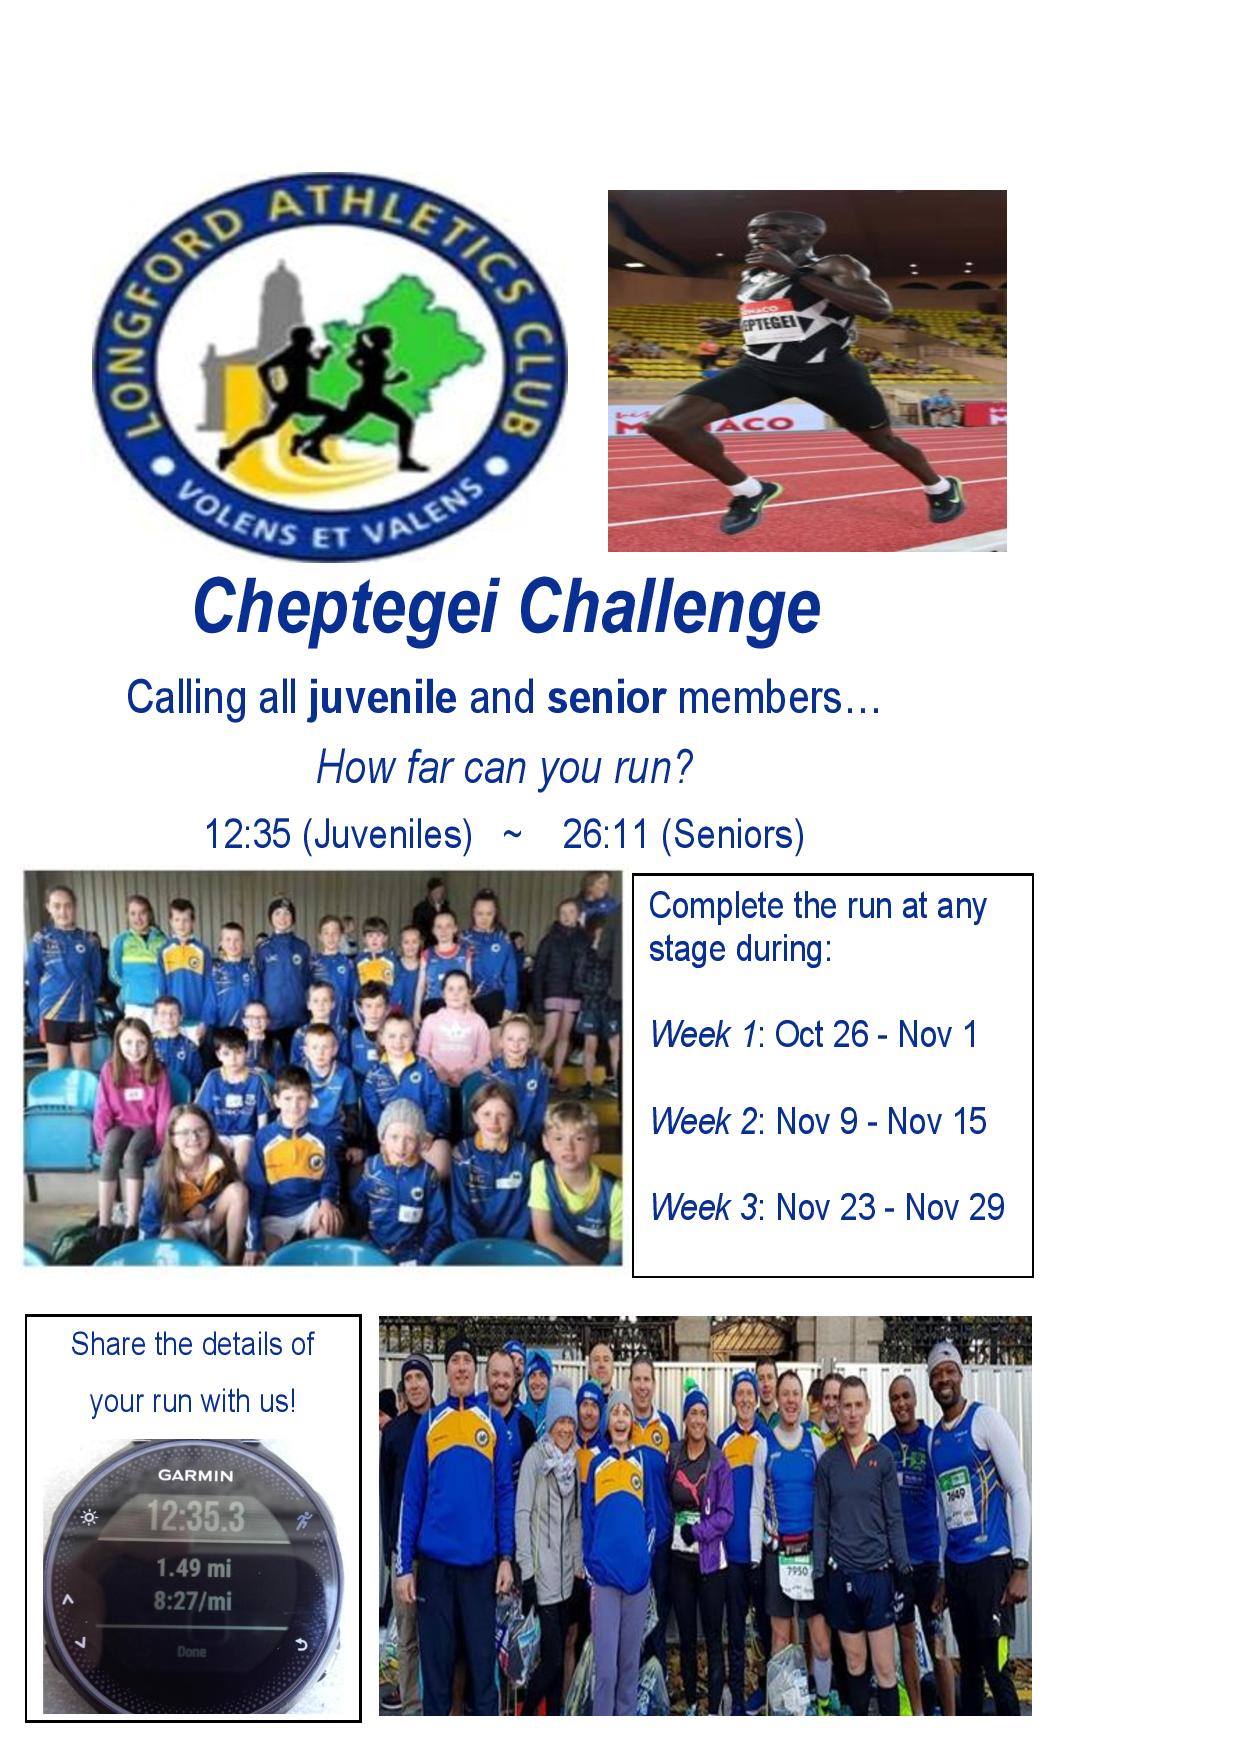 Cheptegei Challenge for Juvenile and Senior Members